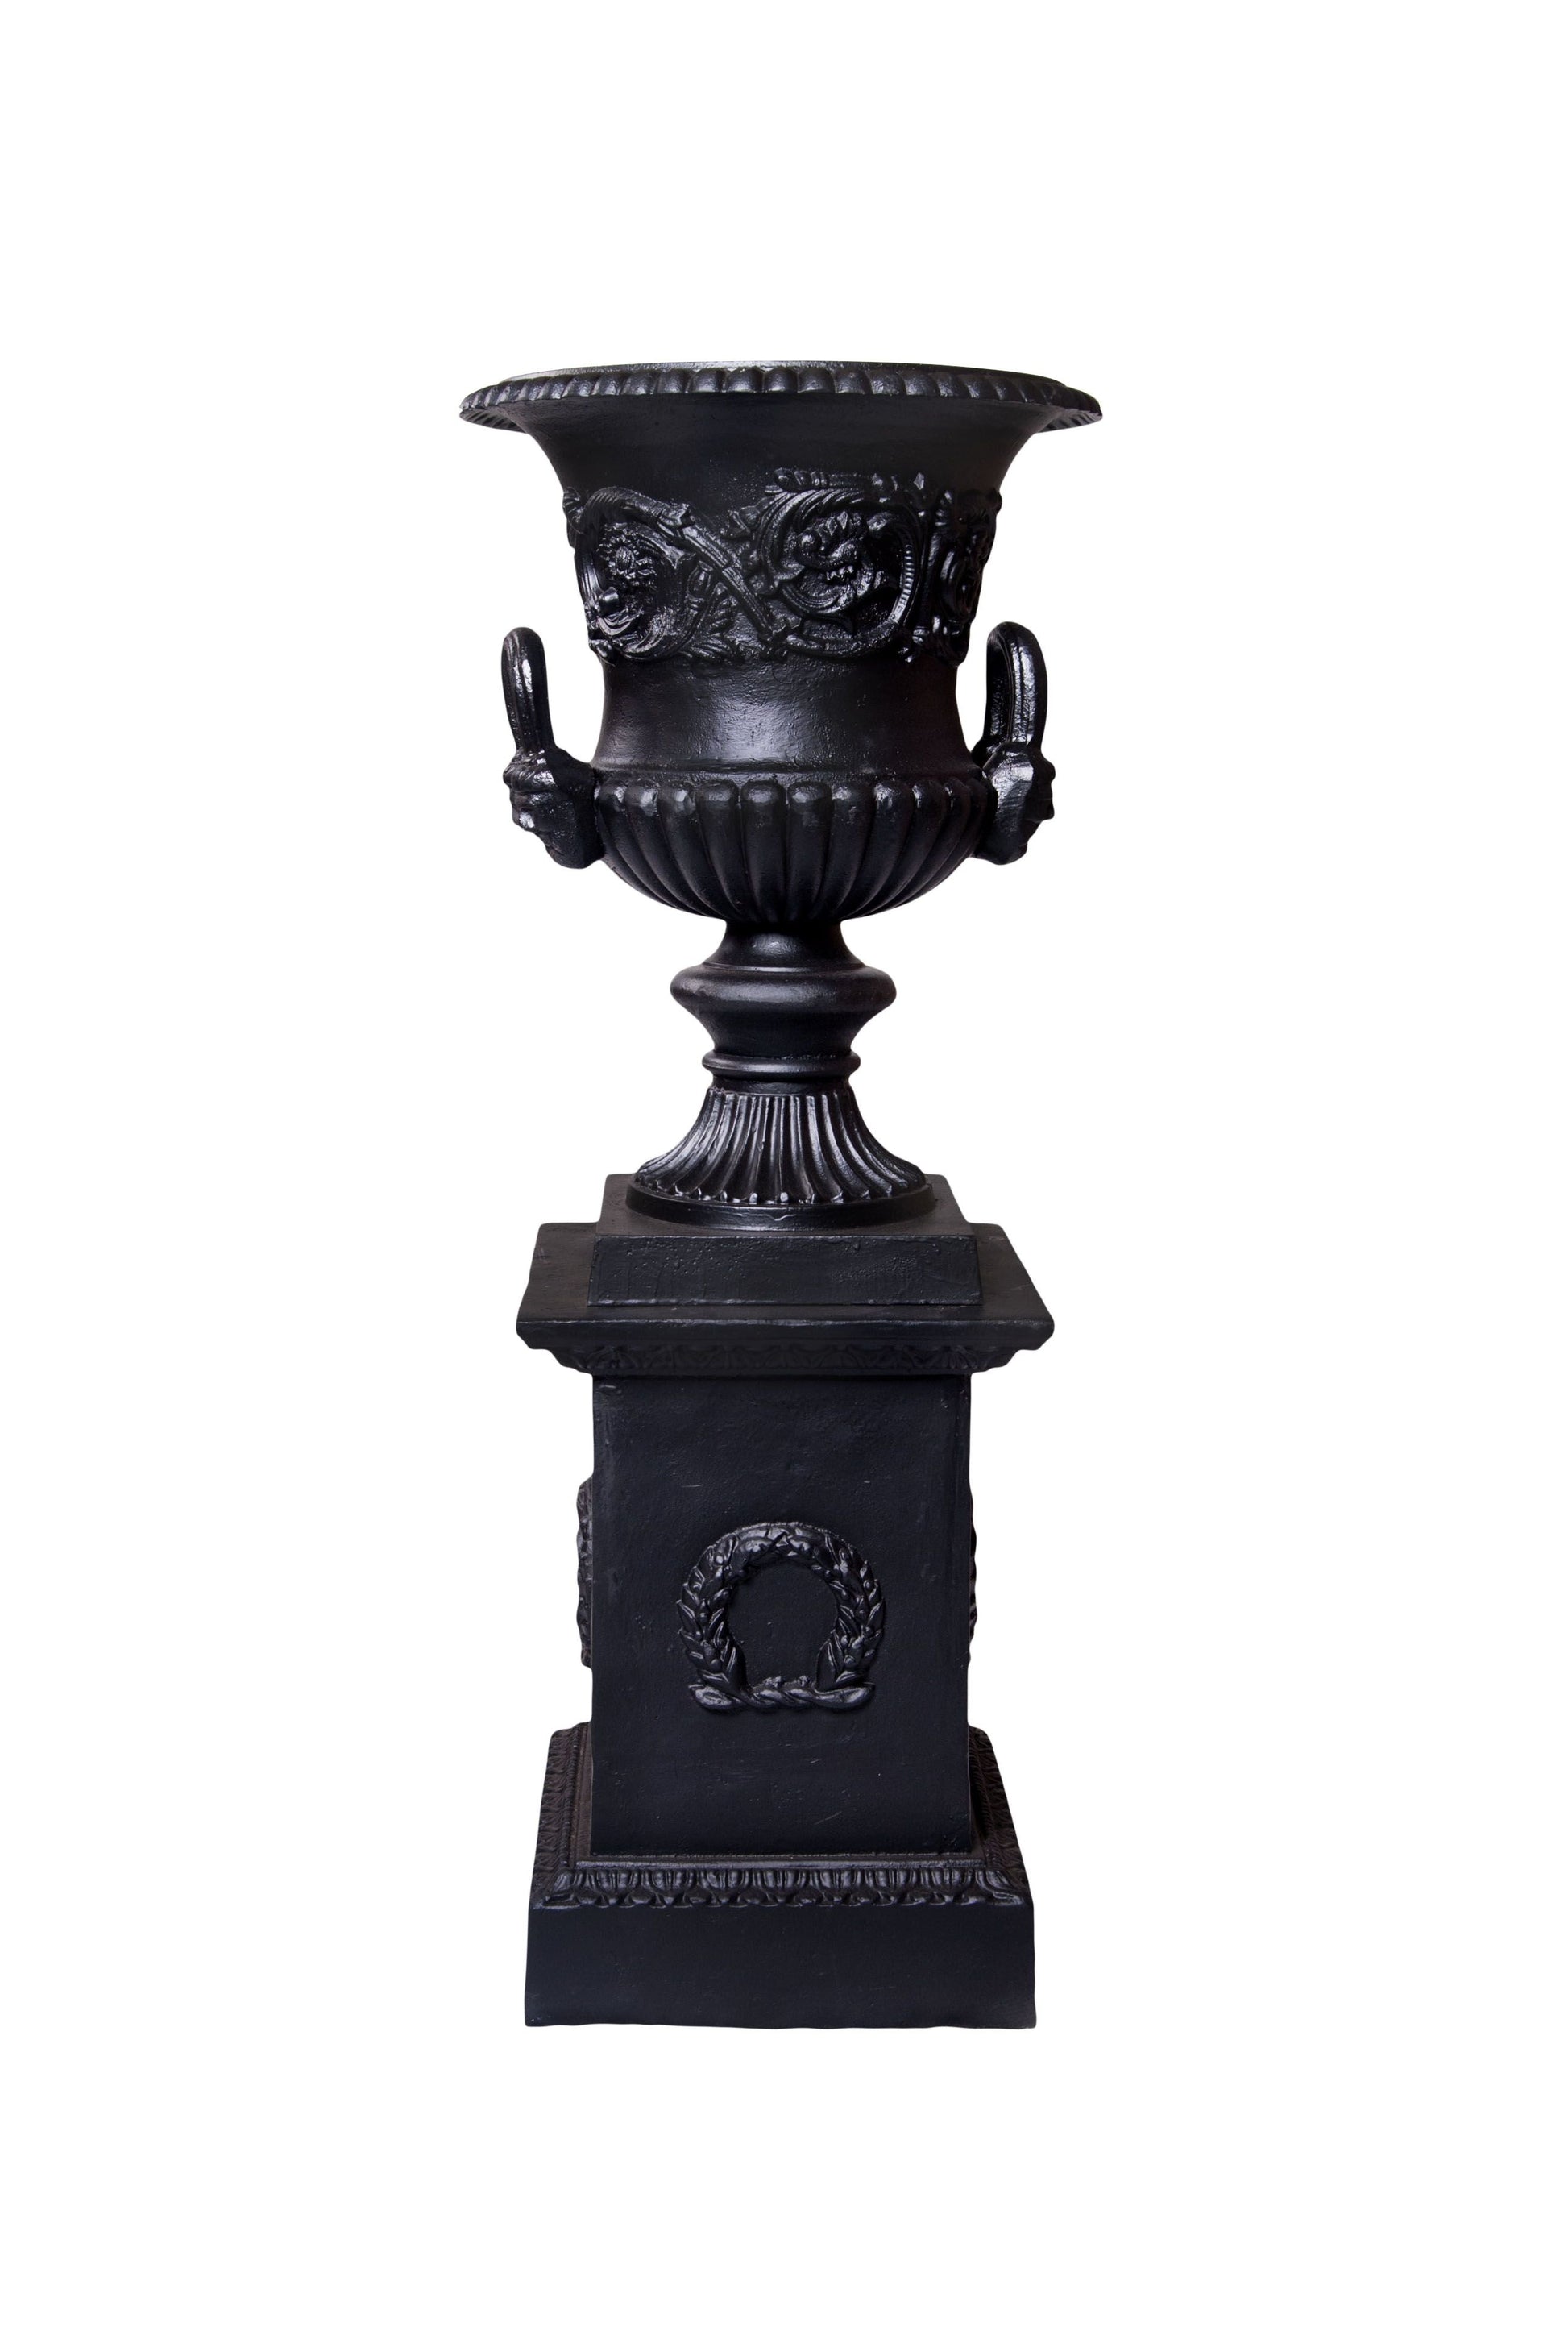 Cast Iron Dorchester Urn & Pedestal Urn and Pedestal Small Black